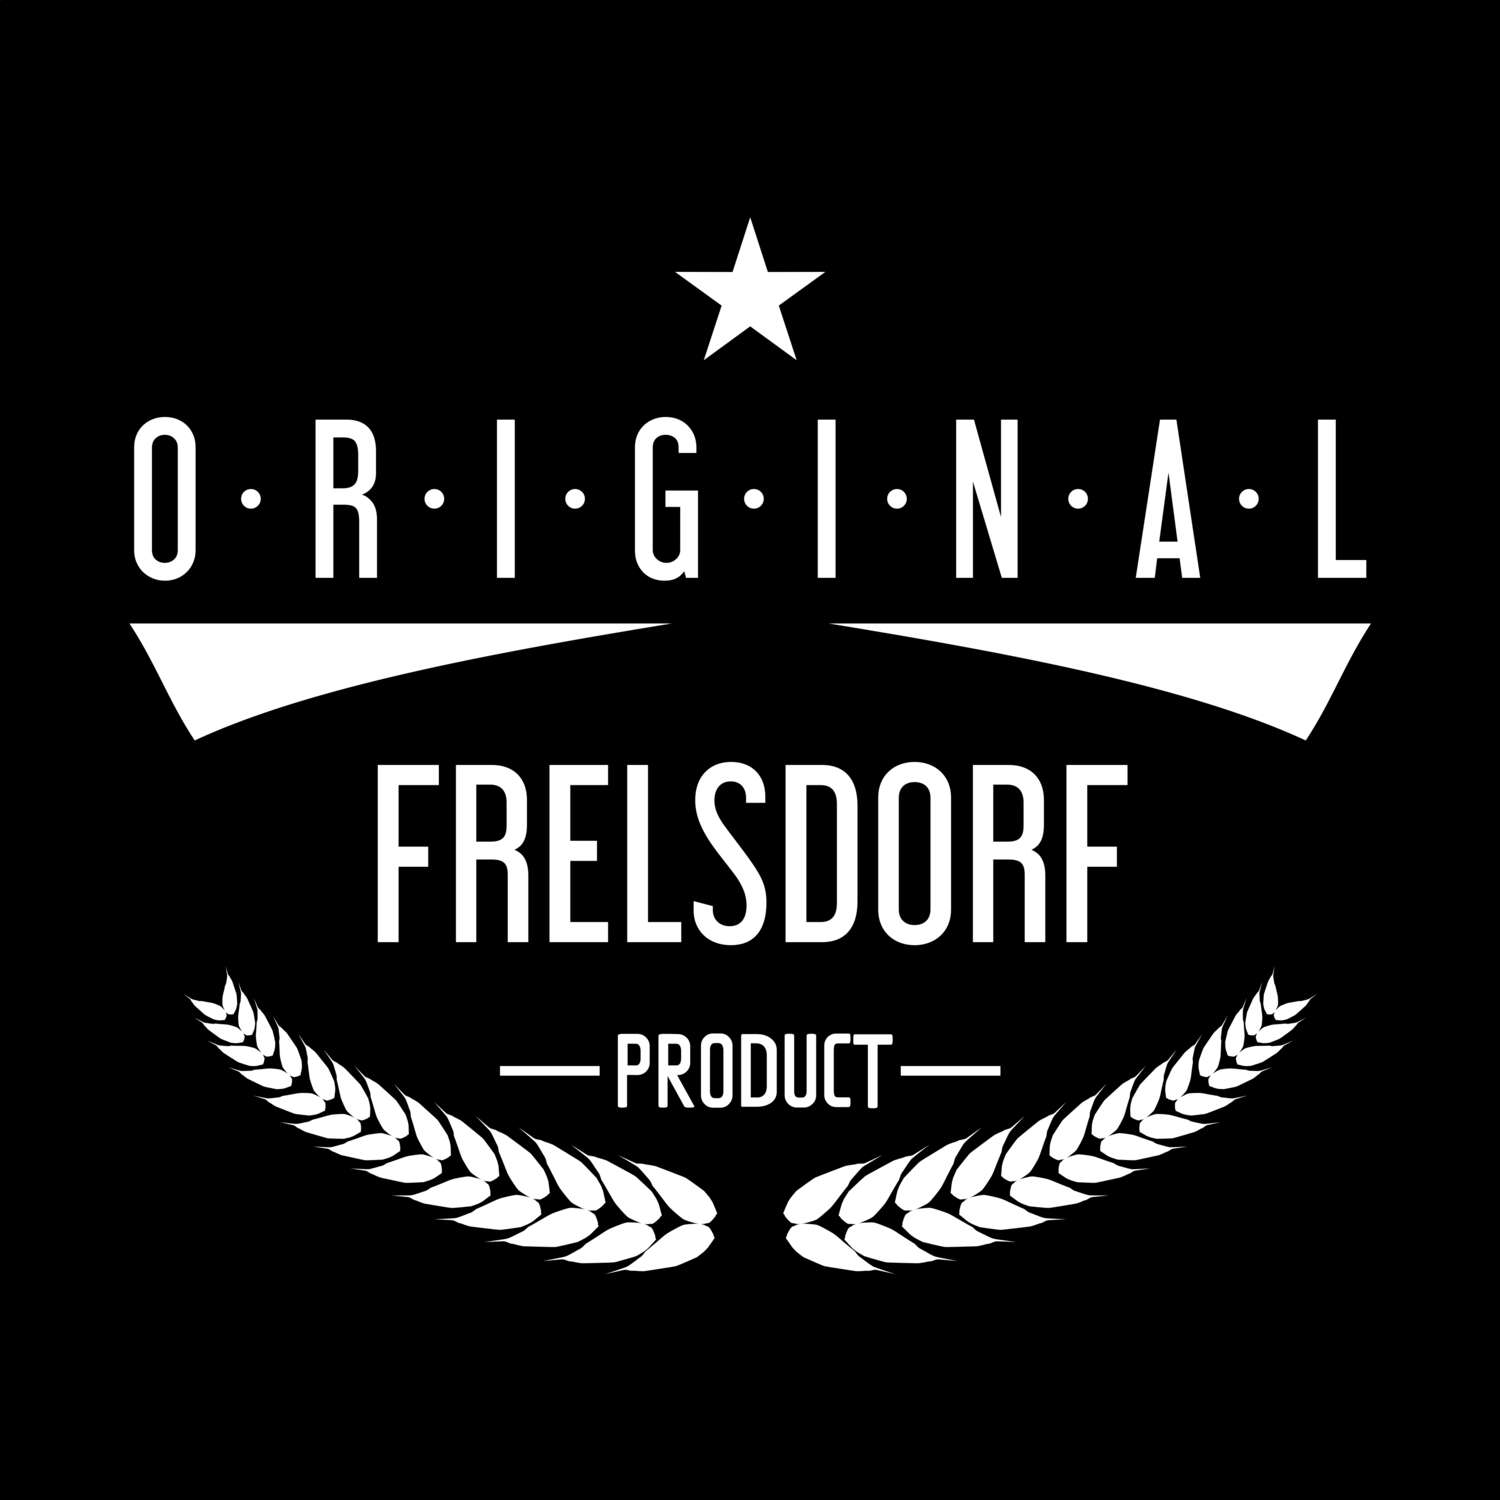 Frelsdorf T-Shirt »Original Product«